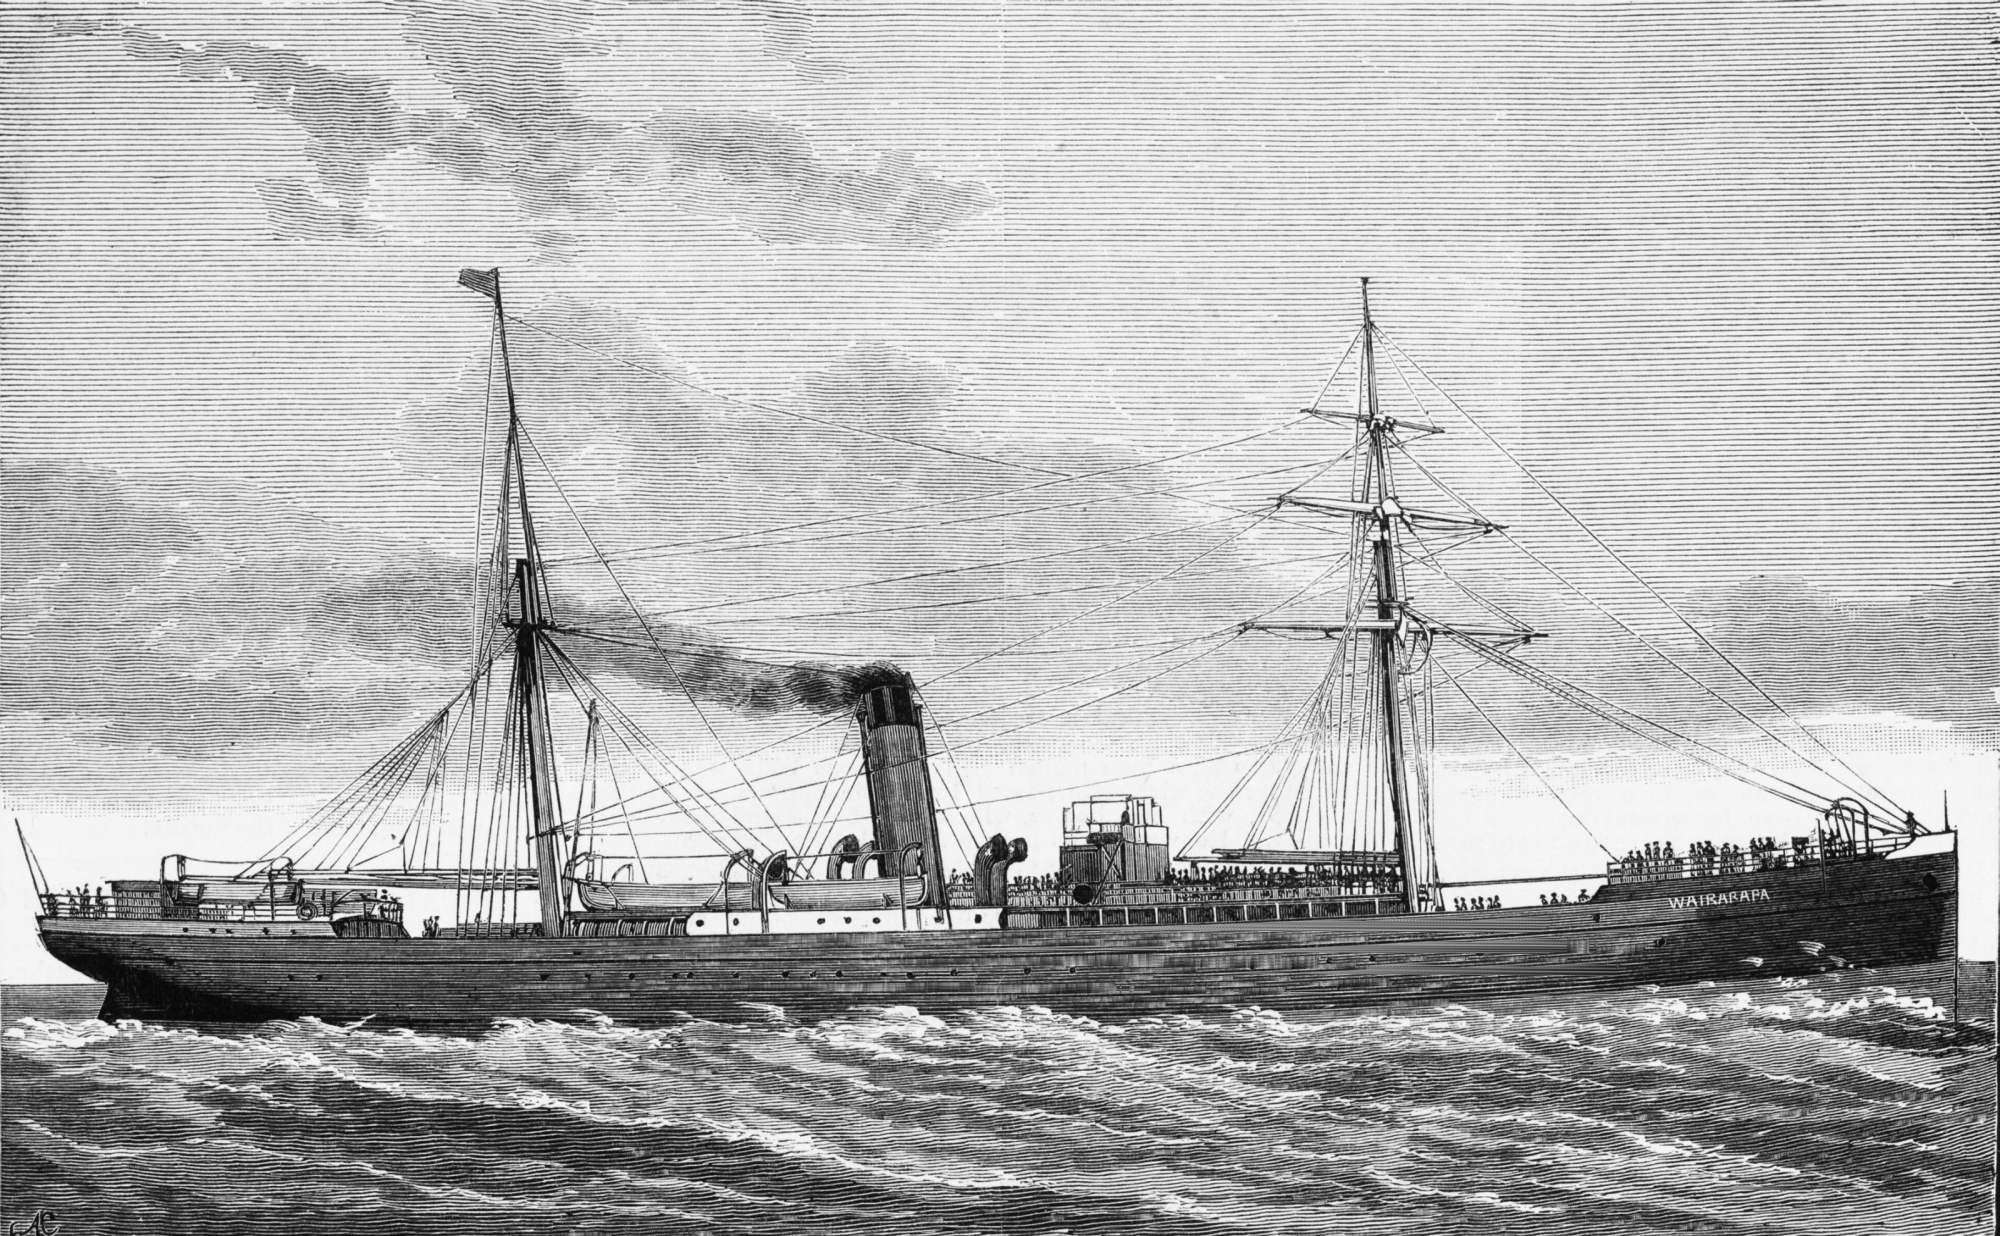 Wairarapa (ship, 1882) - SLV A-S09-04-84-60 b